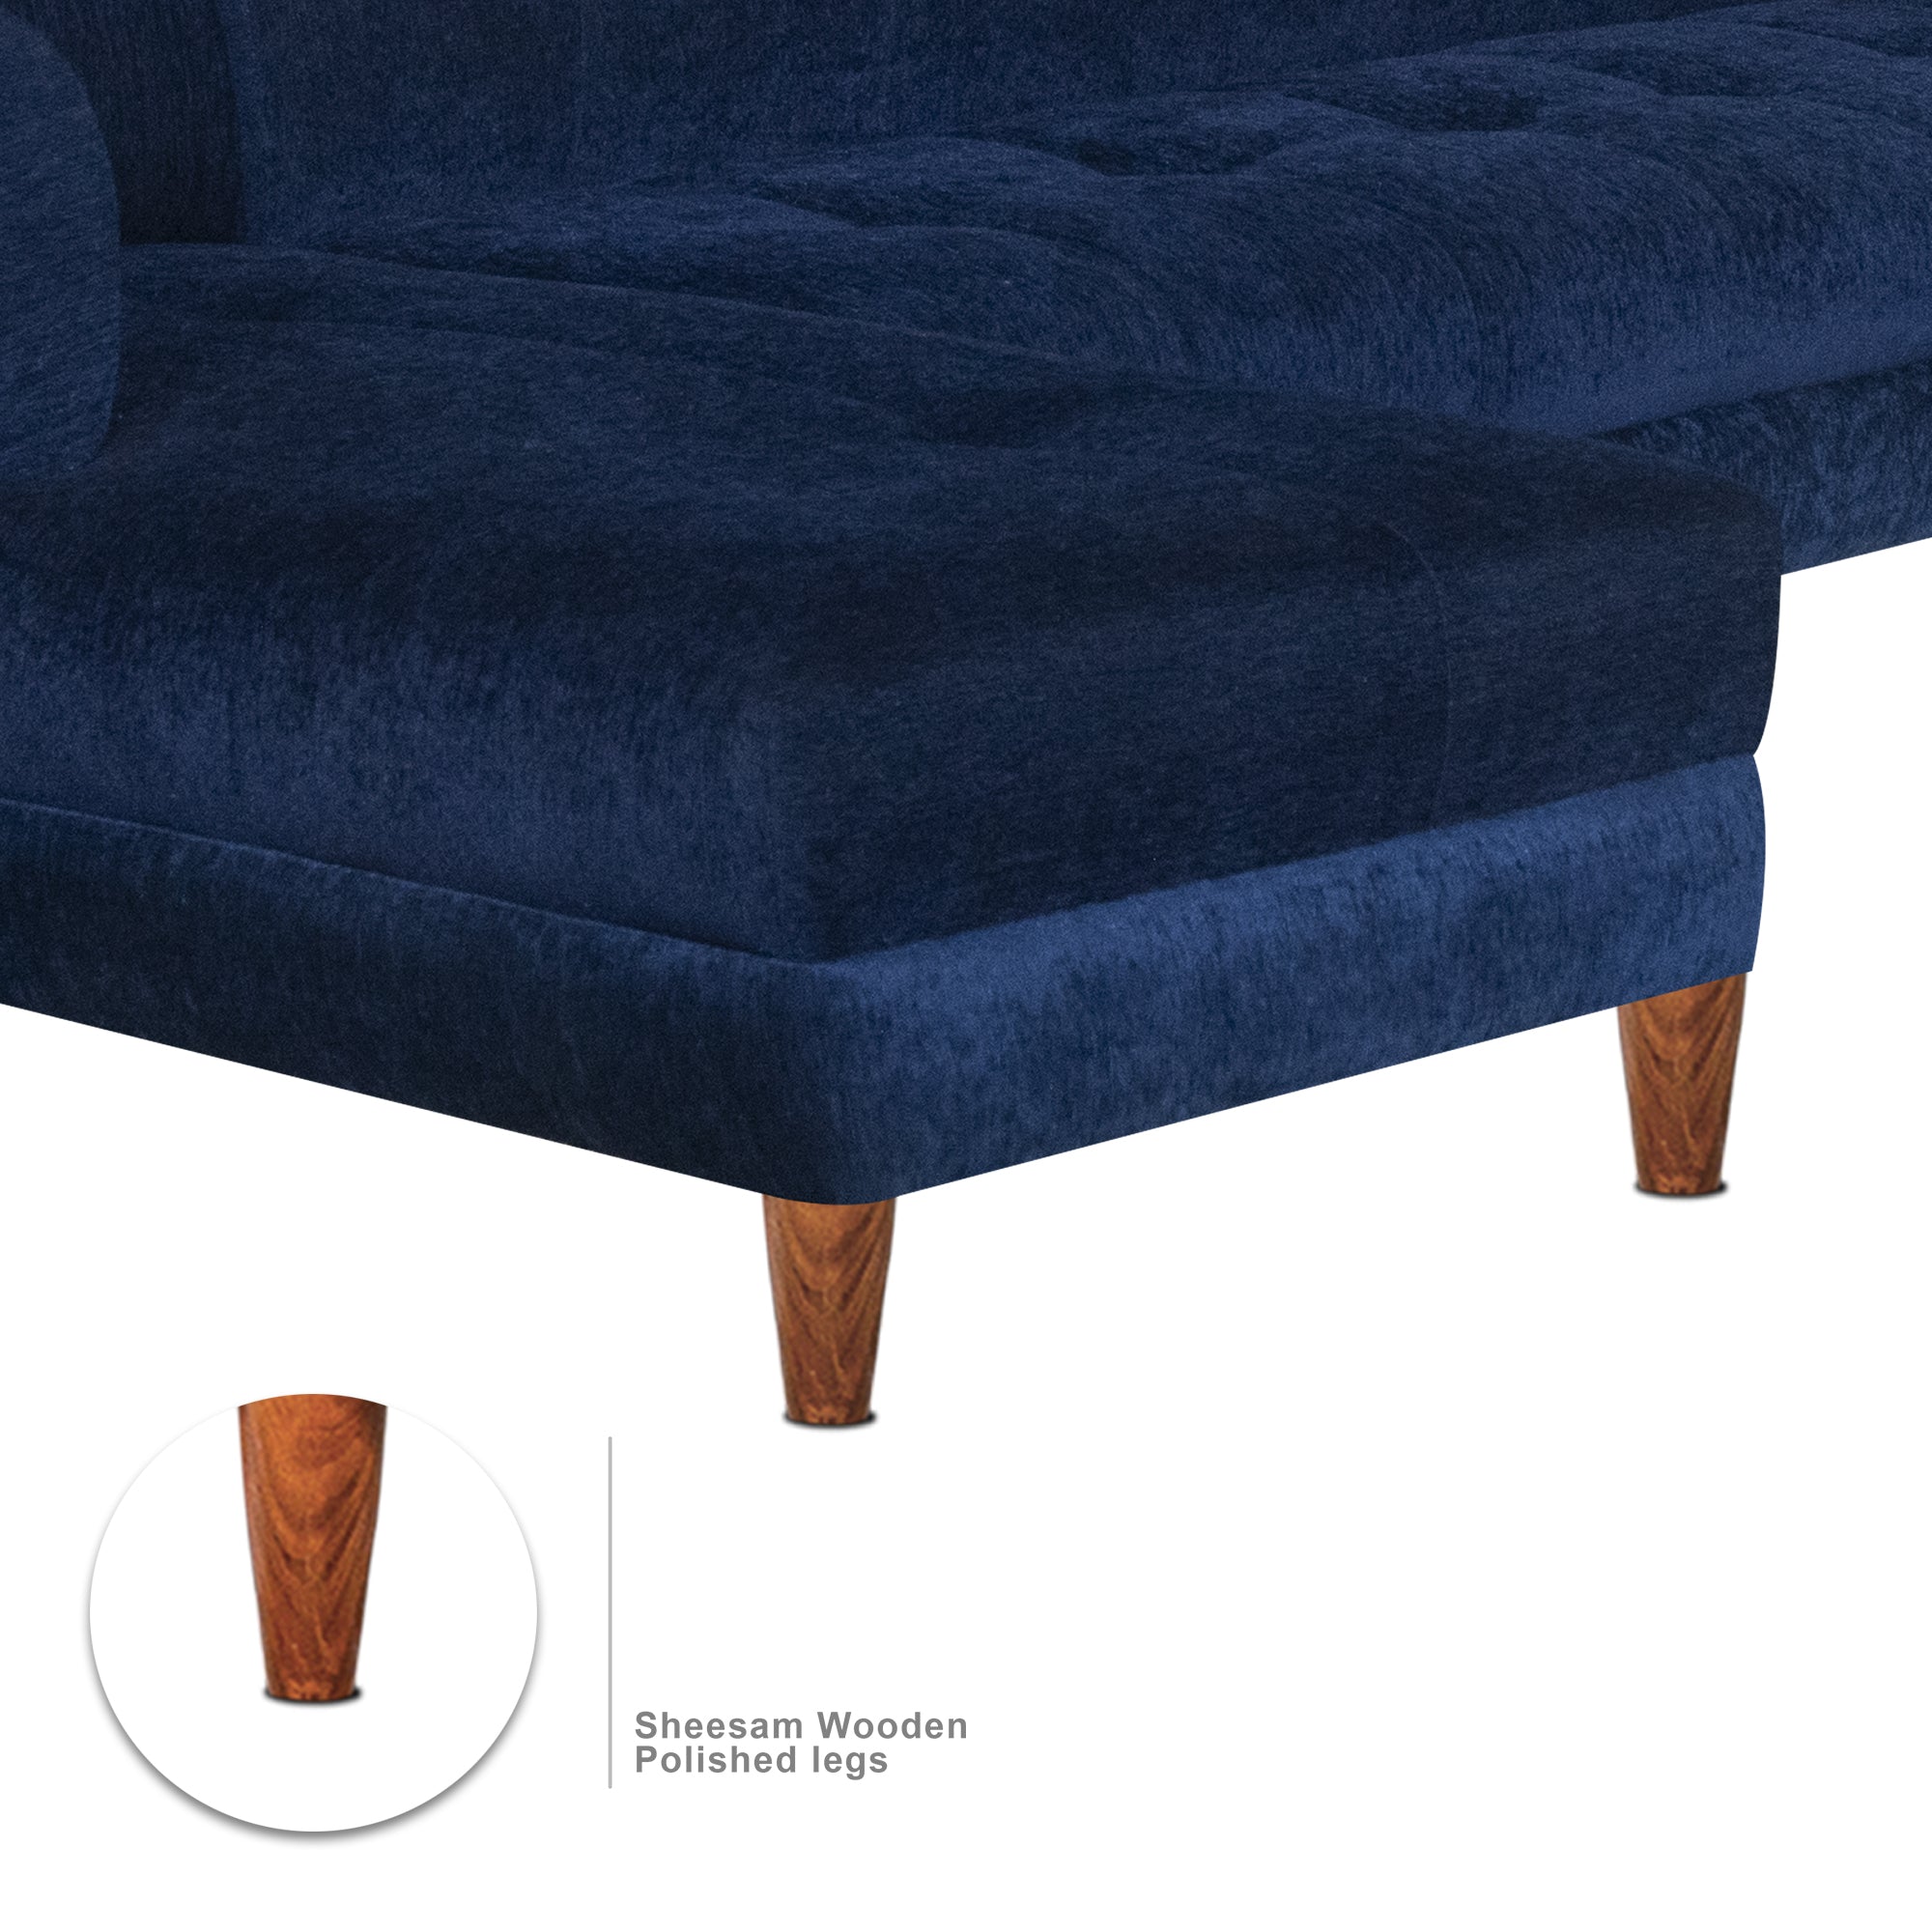 Seventh Heaven Milan 6 Seater Sofa, Extra Spacious, Chenille Molfino Fabric: 3 Year Warranty Fabric 6 Seater Sofa  (Finish Color - Blue, DIY(Do-It-Yourself))